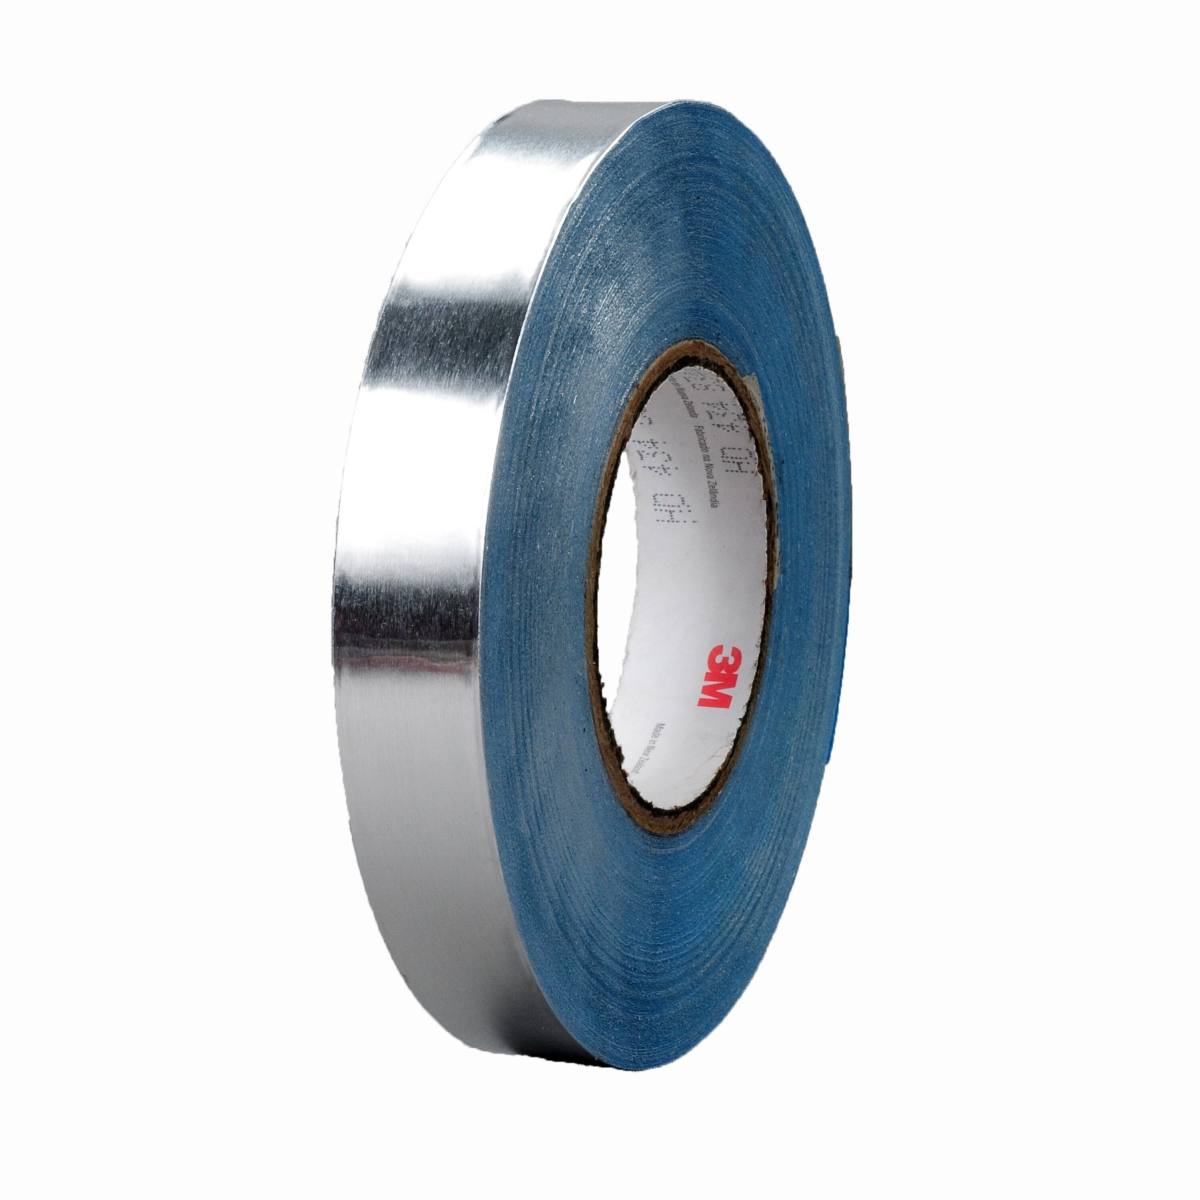 3M metal adhesive tape 434, silver, 50 mm x 55 m, 0.20 mm